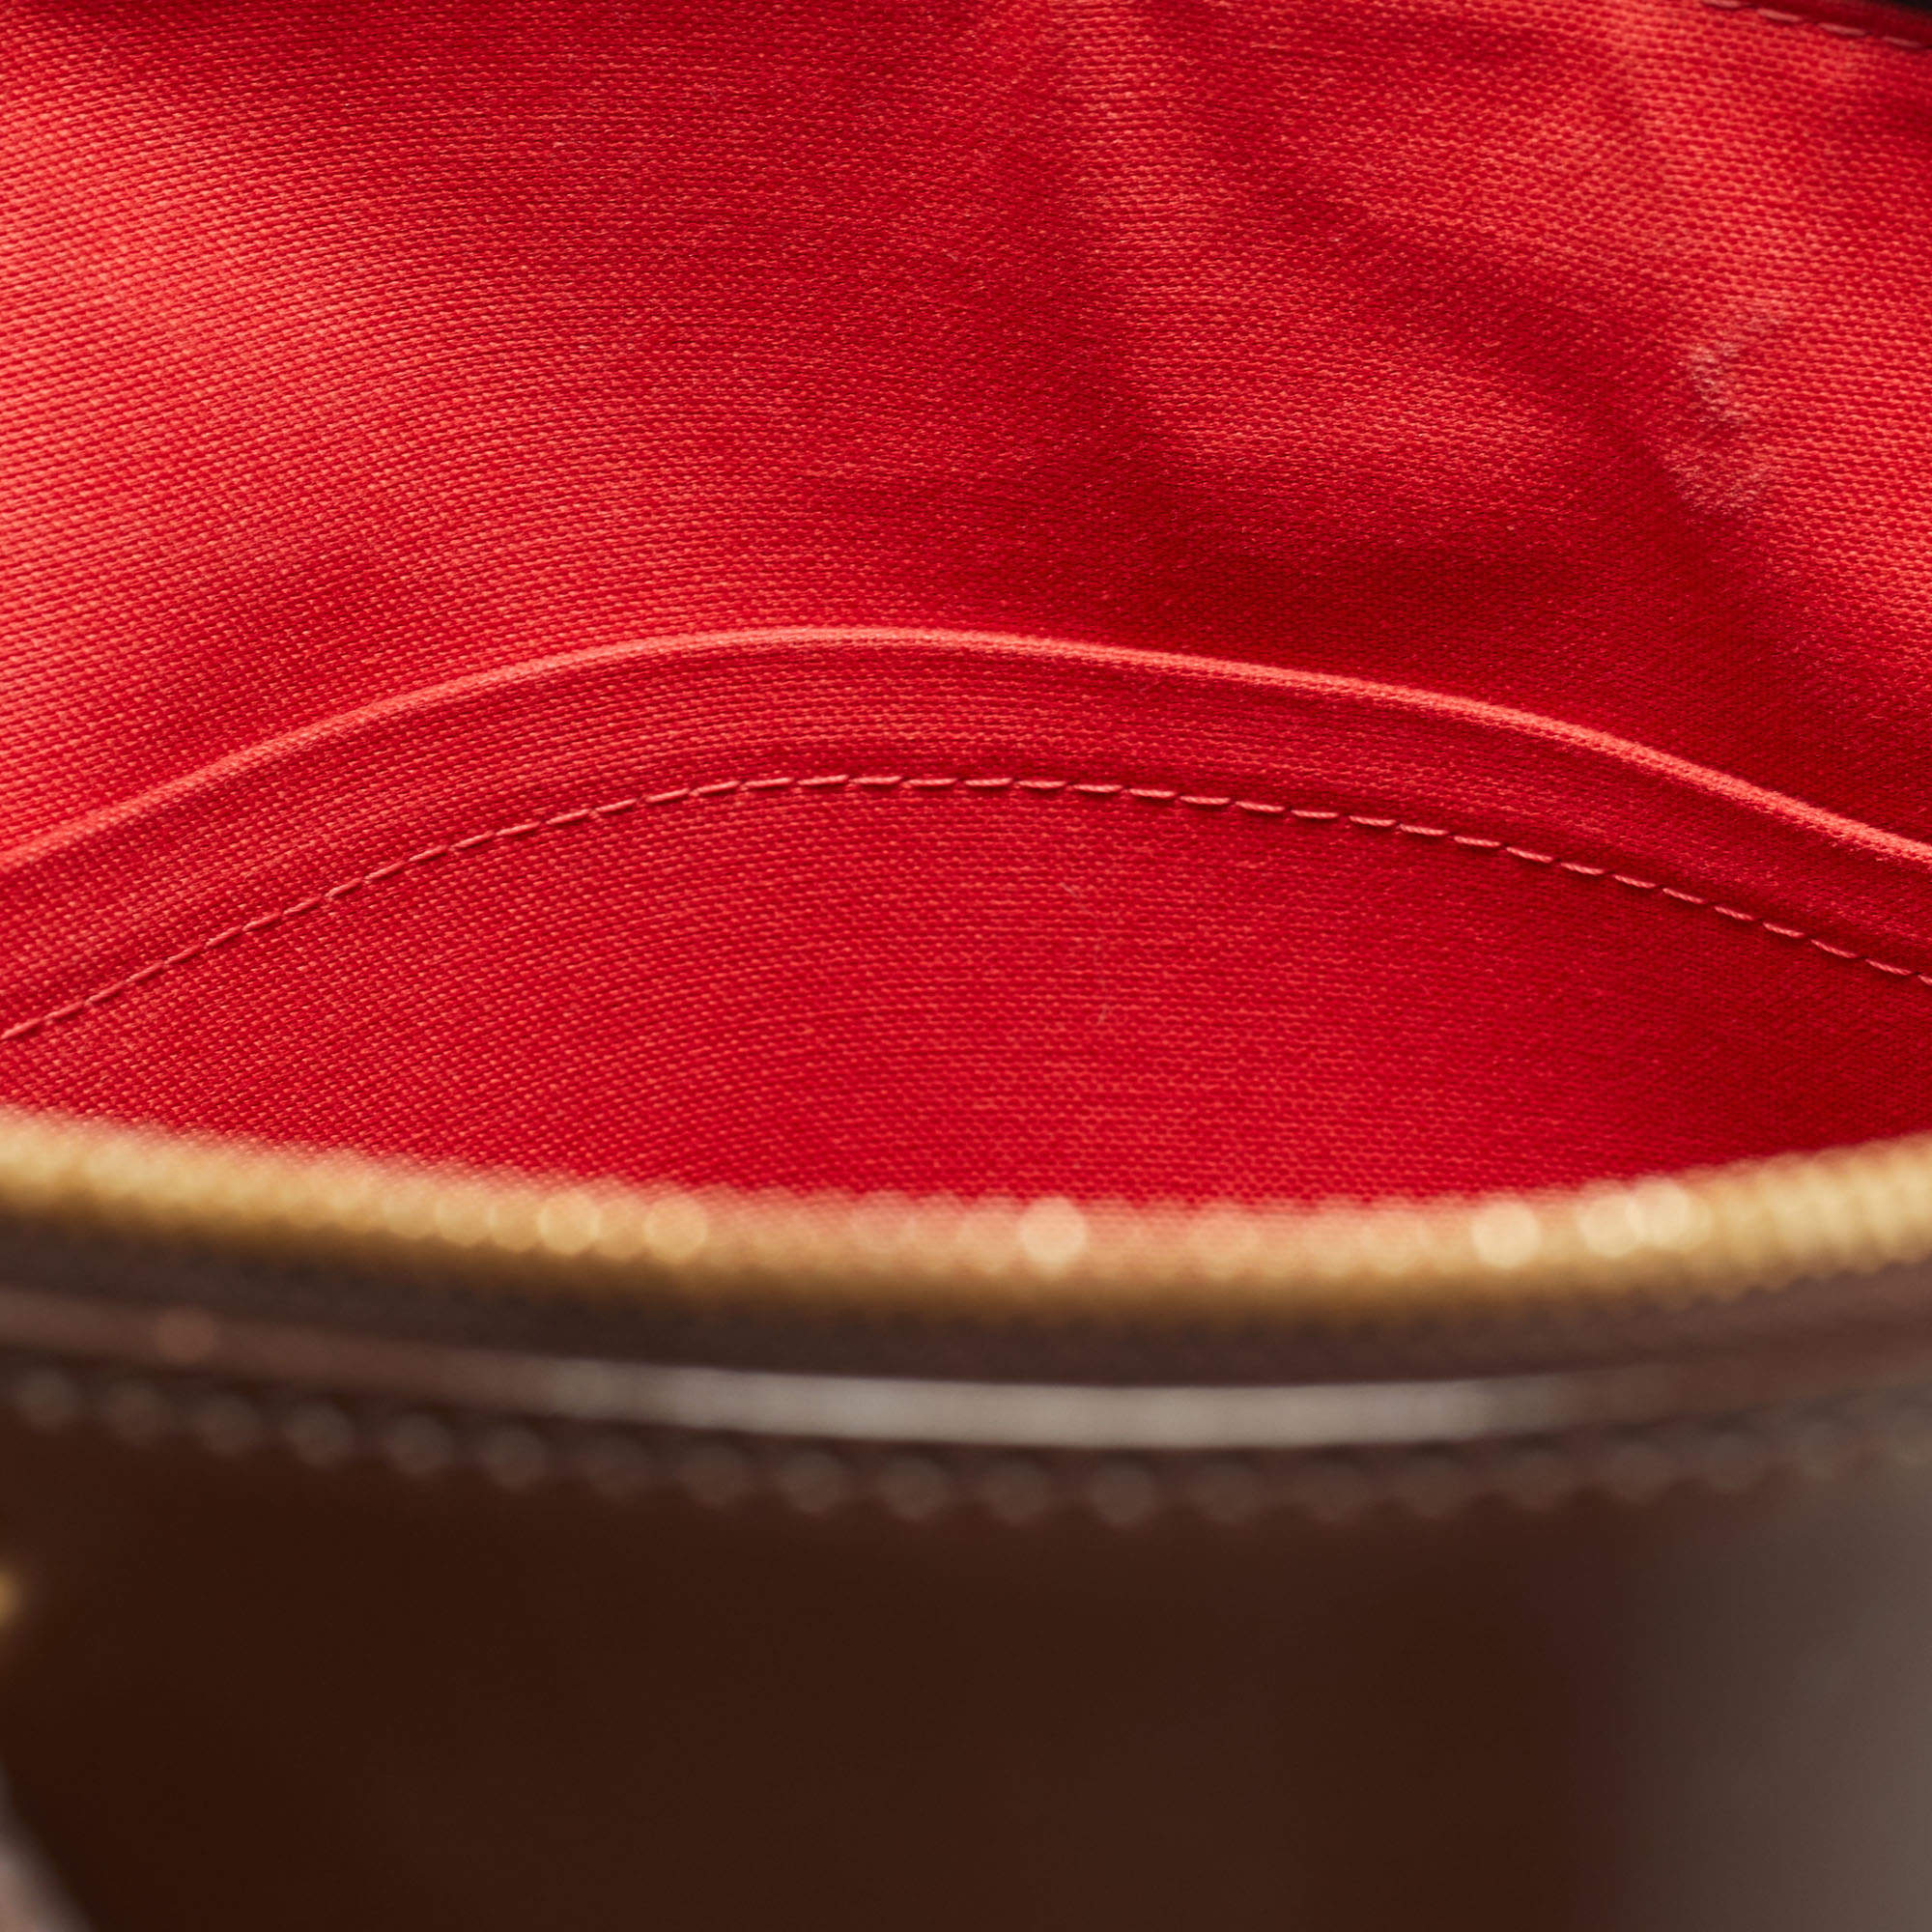 Westminster cloth handbag Louis Vuitton Brown in Cloth - 33380095